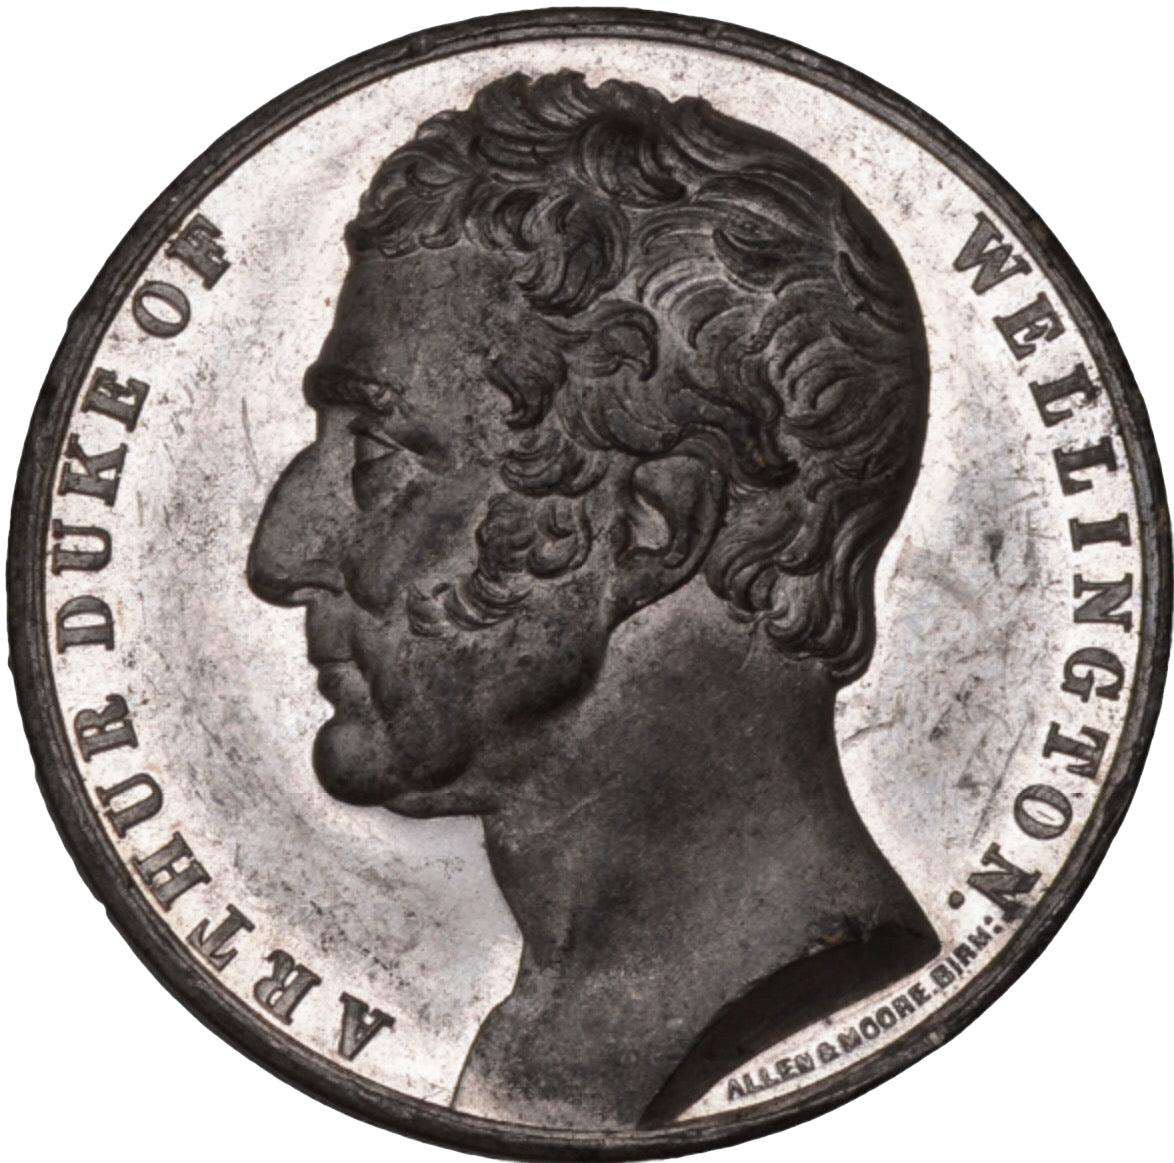 1844 Duke of Wellington, Equestrian statue 39mm white metal medal BHM 2191 E1387